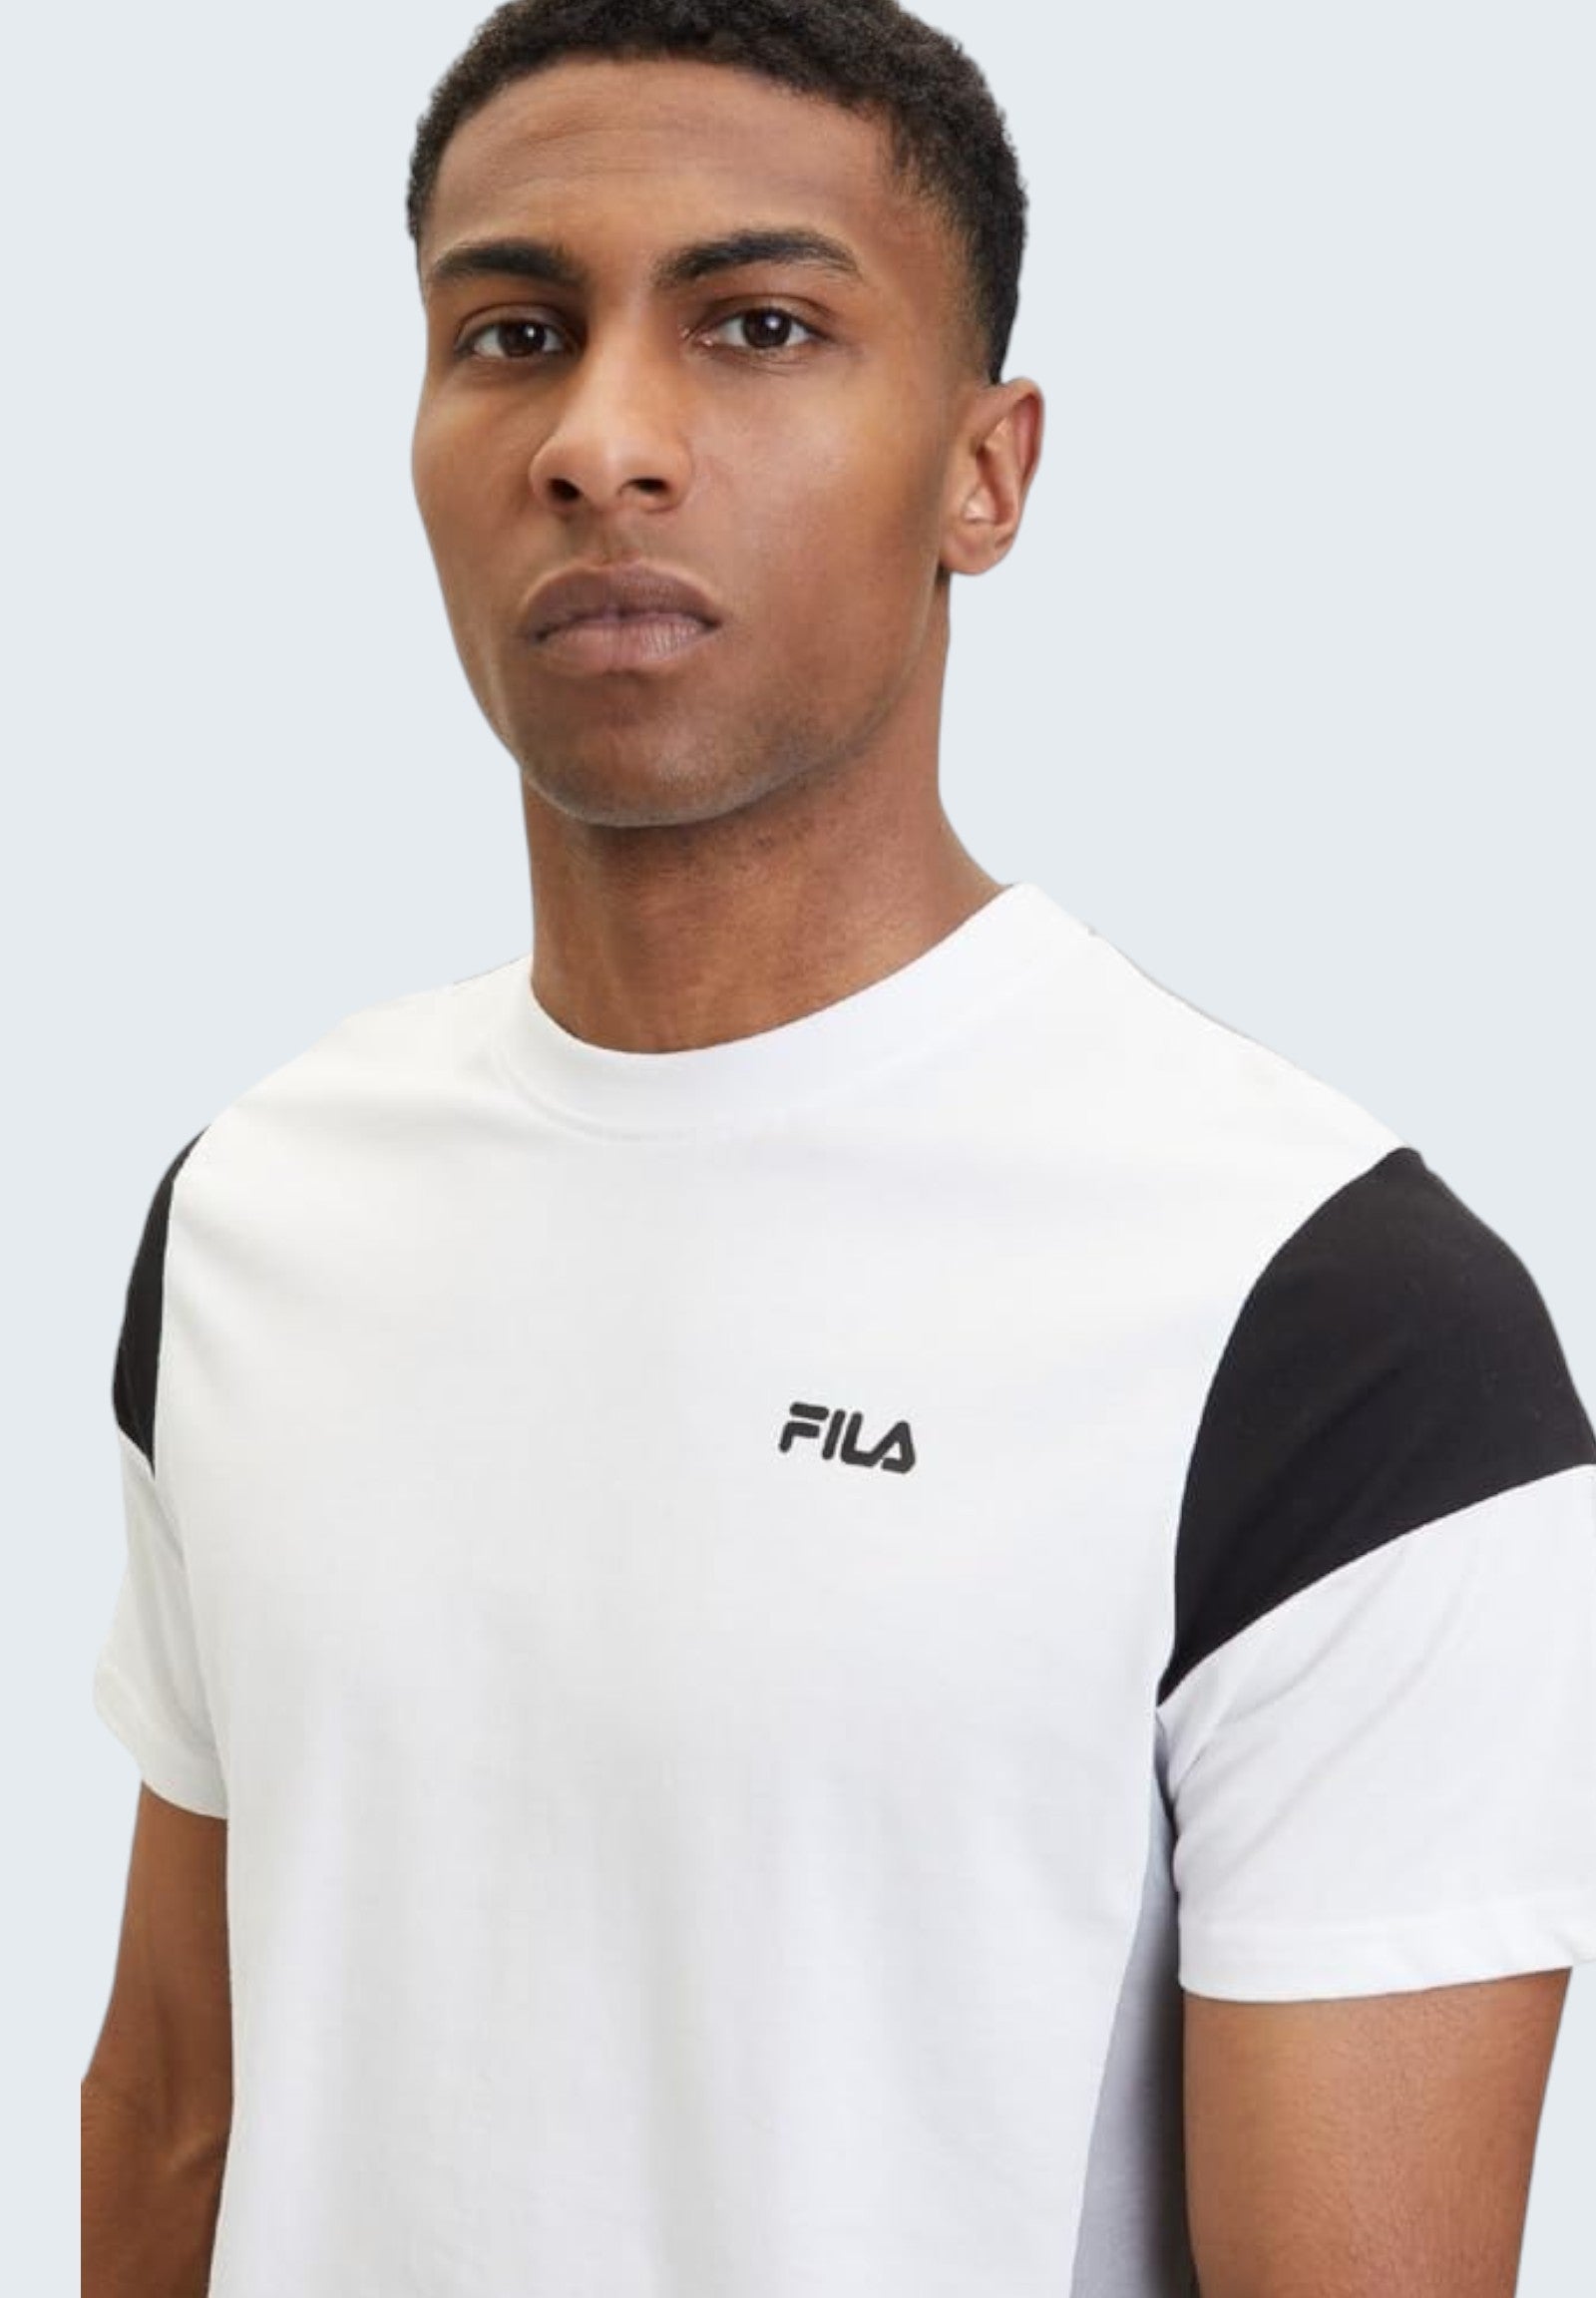 Fila T-Shirt* Fam0629 Bright White, Sleet, Black